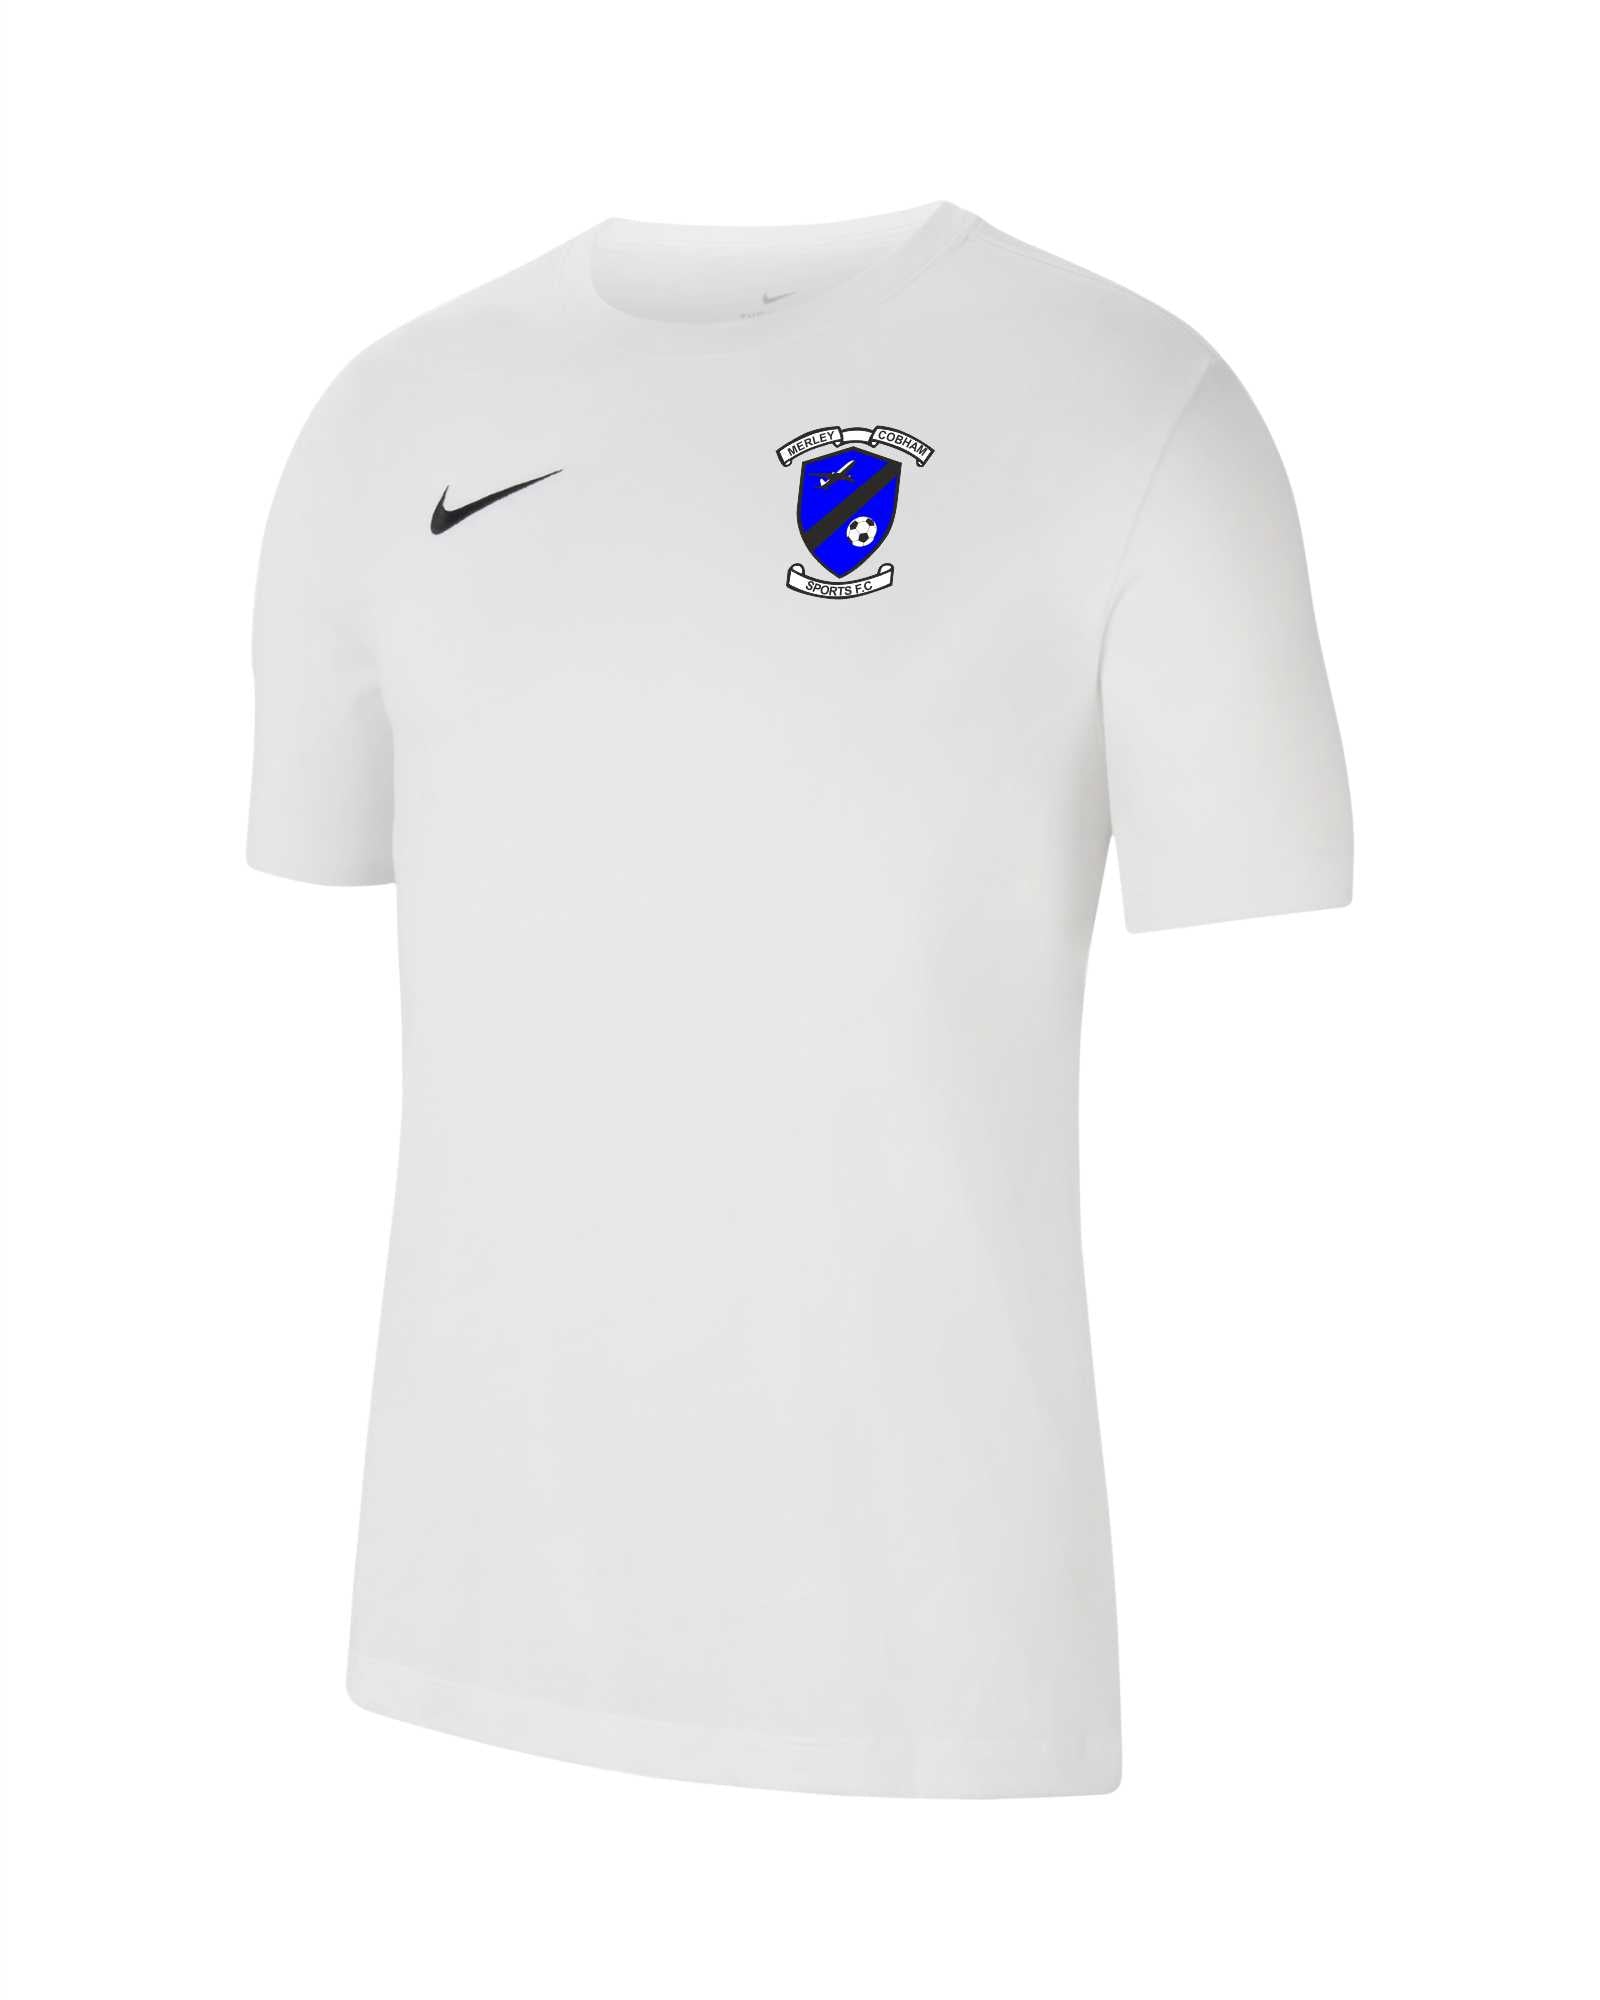 Merley Cobham - Nike Park 20 T-Shirt - White